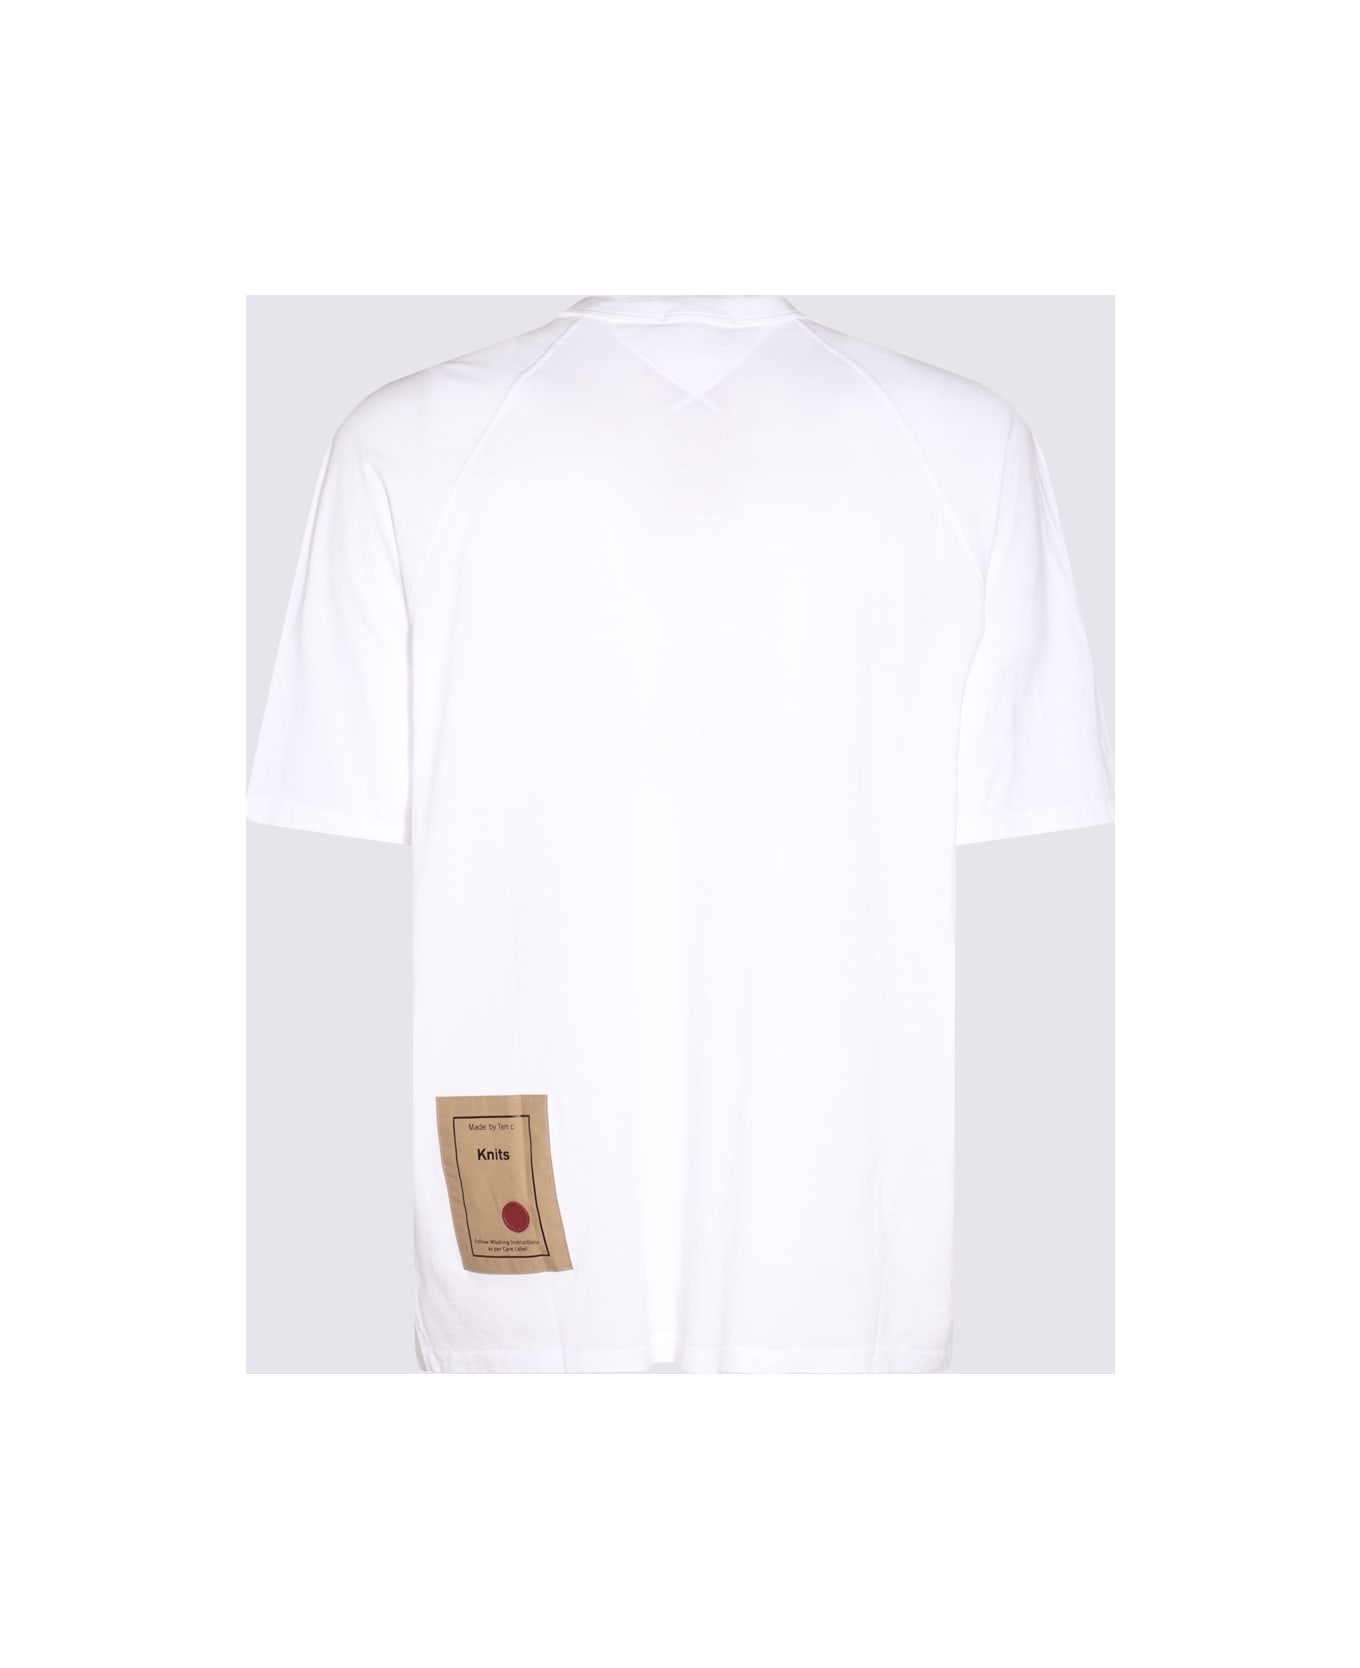 Ten C White Cotton T-shirt